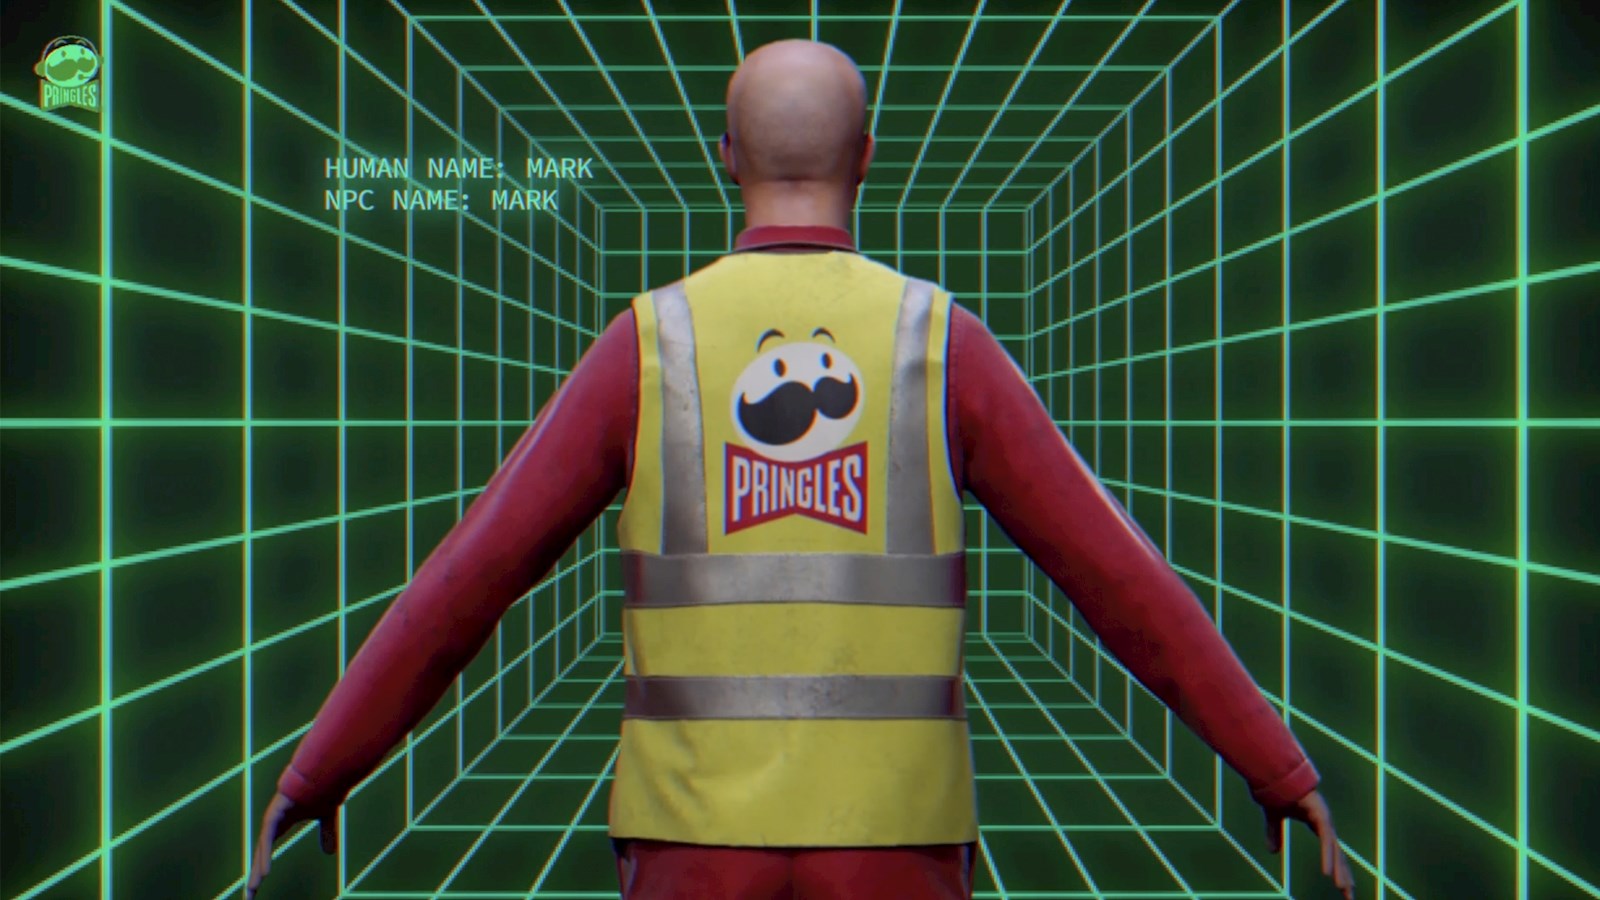 AI Pringles character in a futuristic background